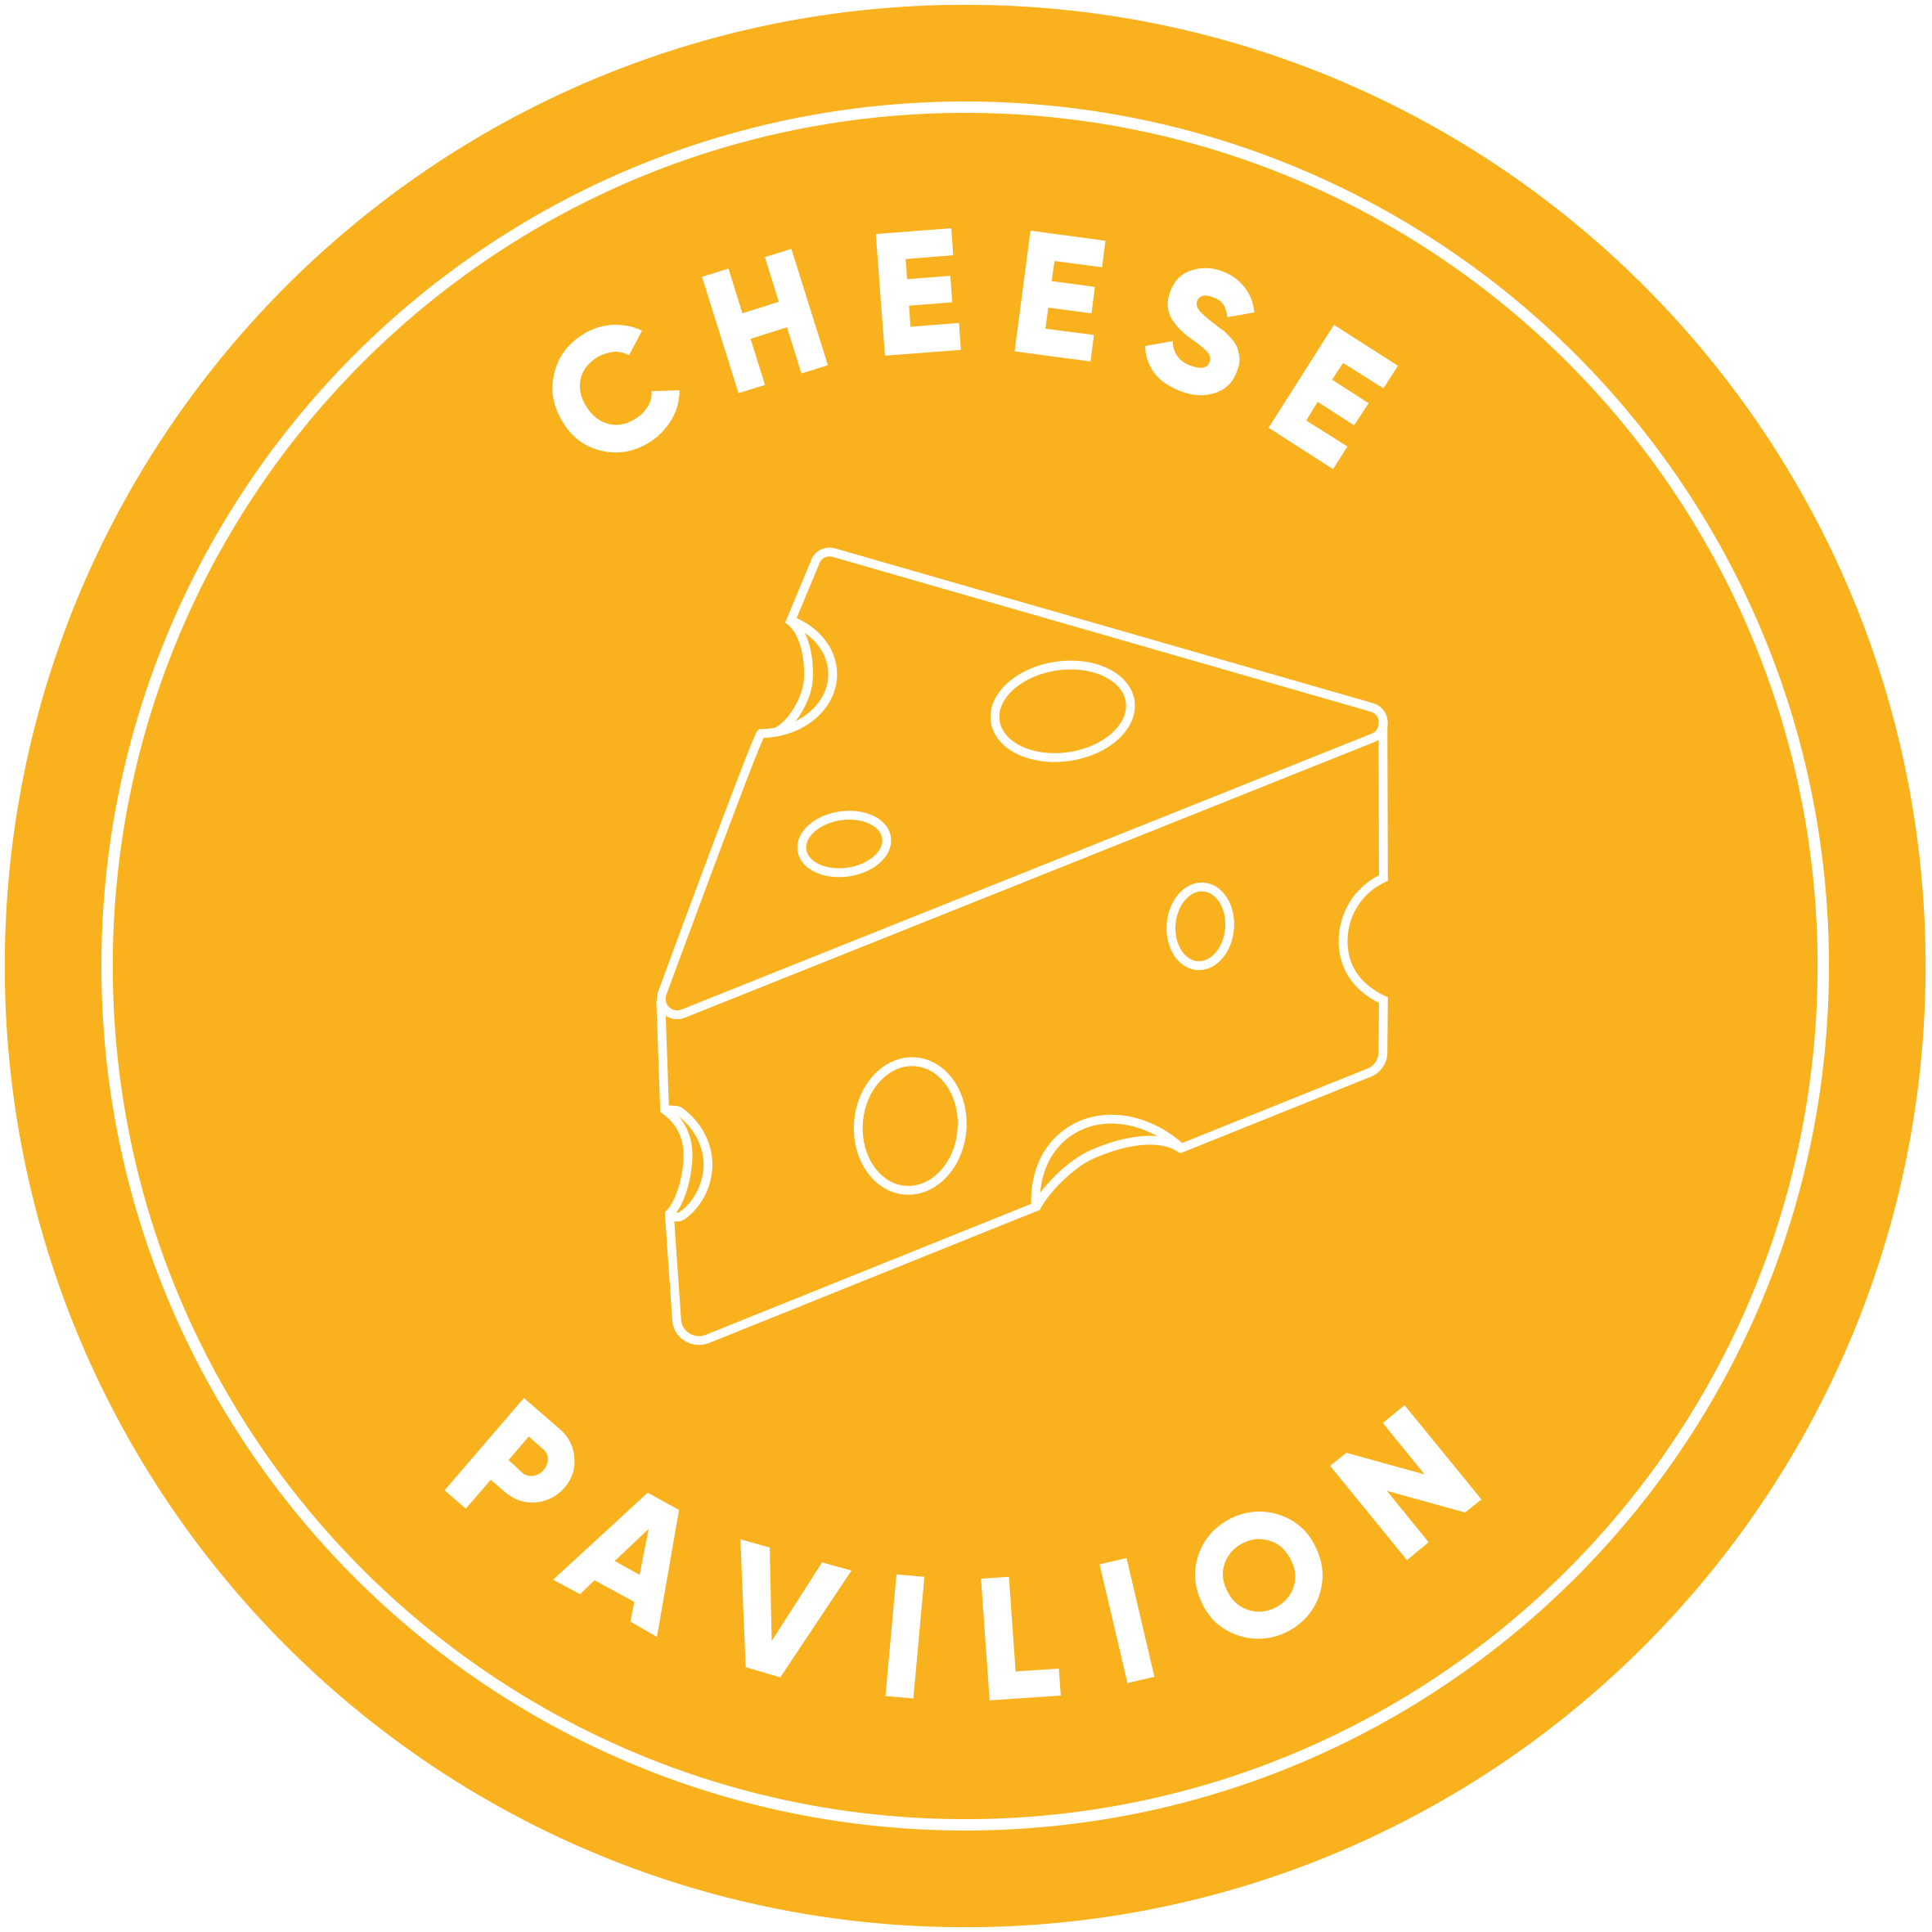 Cheese Pavilion Roundel